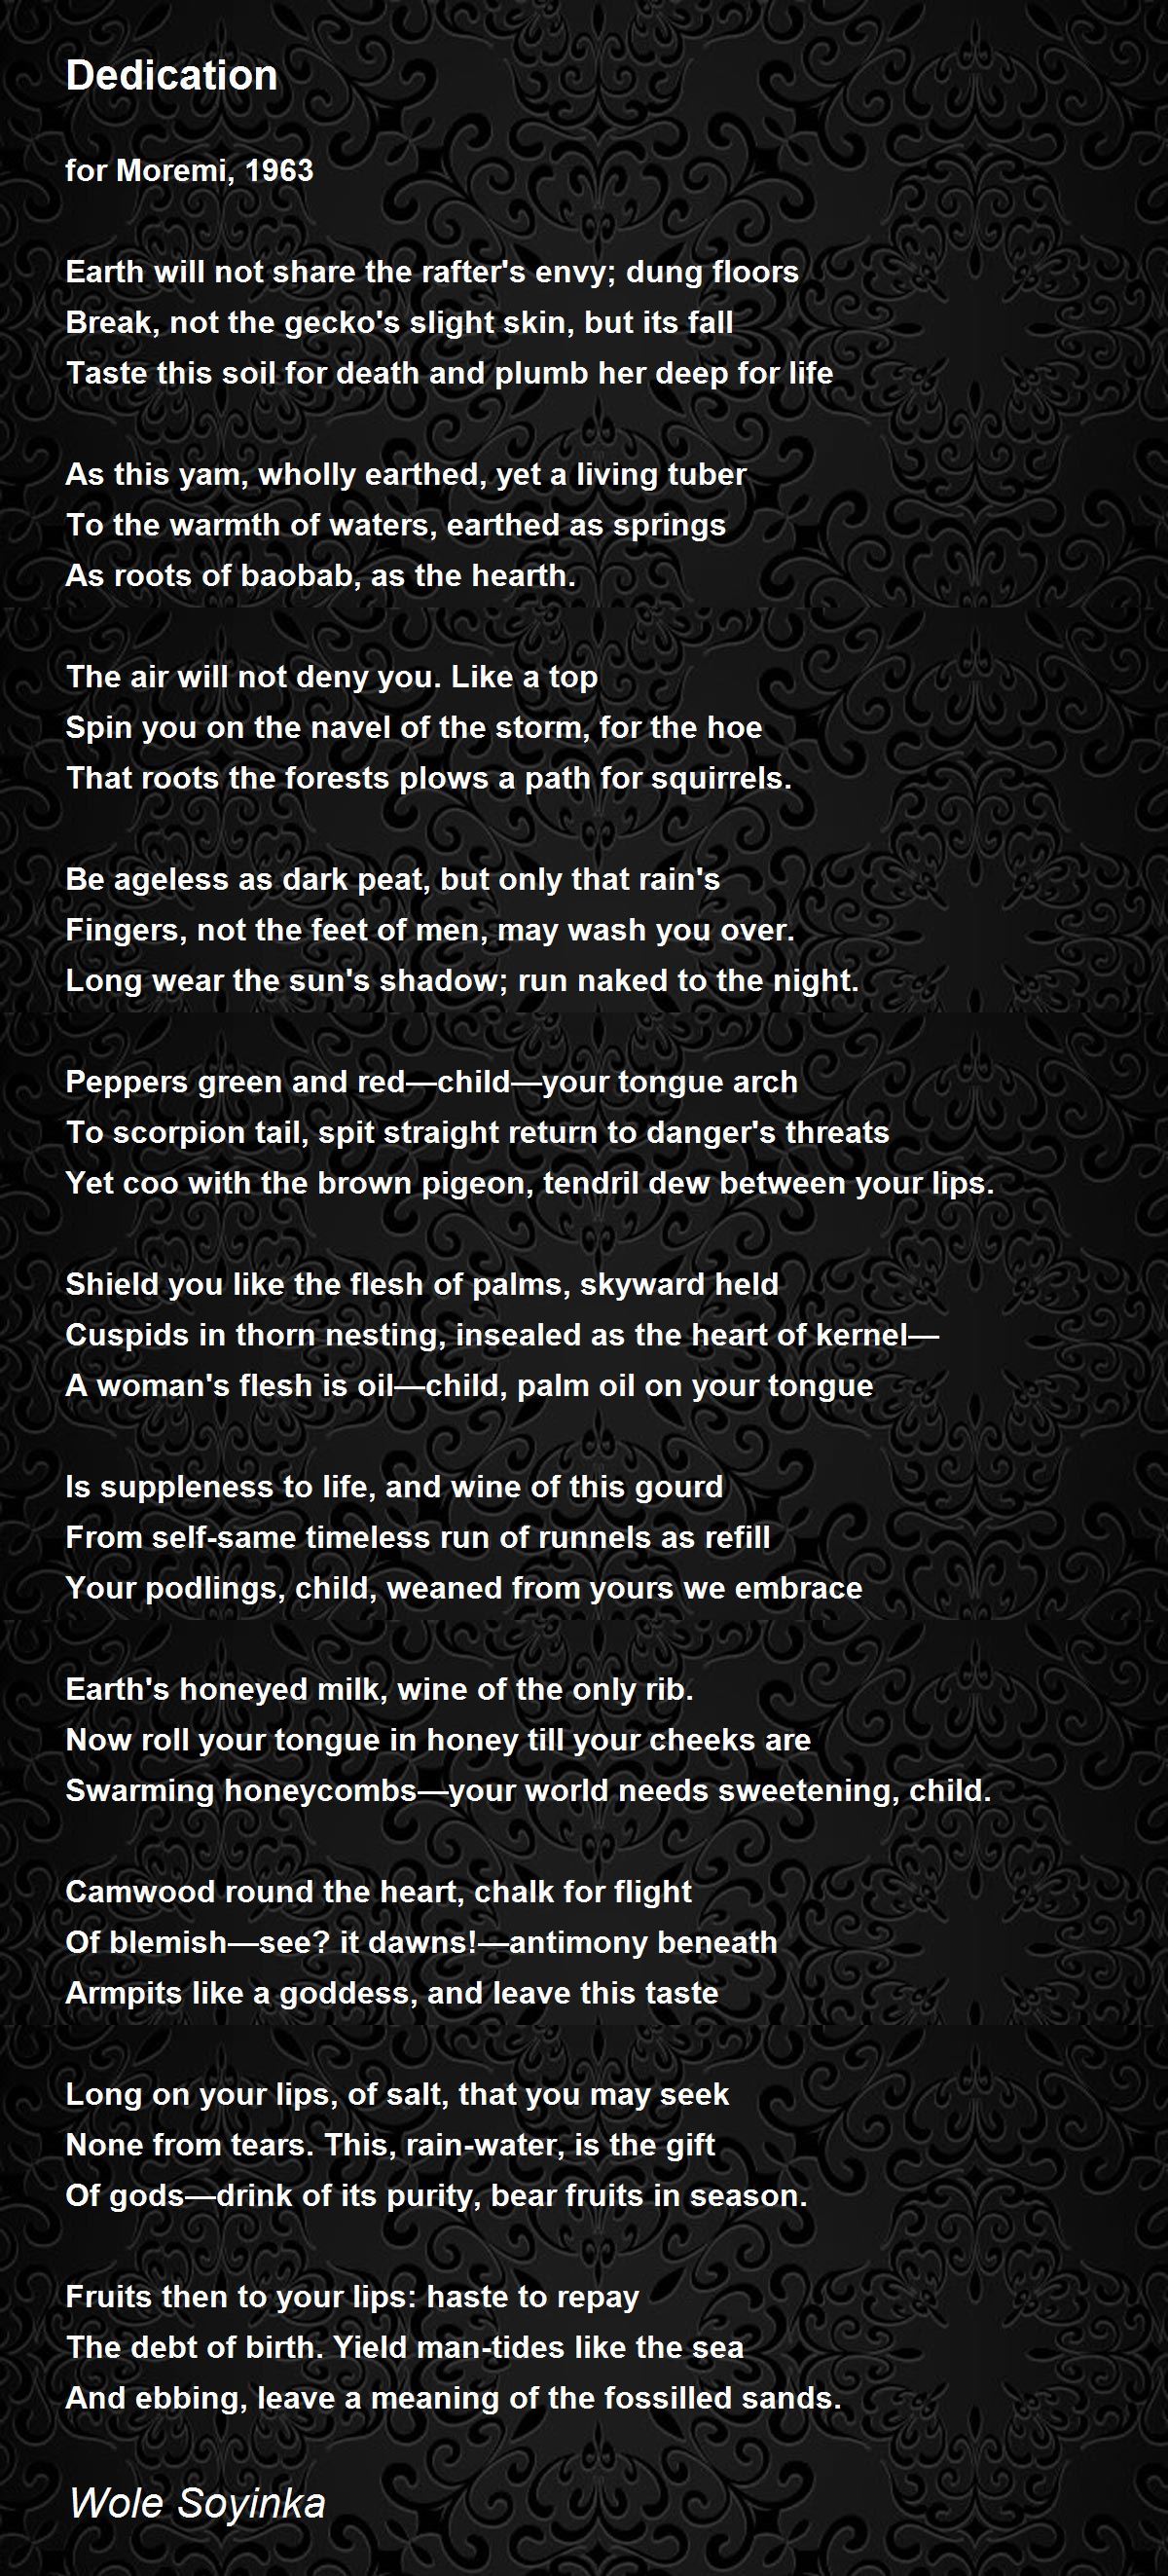 Dedication - Dedication Poem by Wole Soyinka